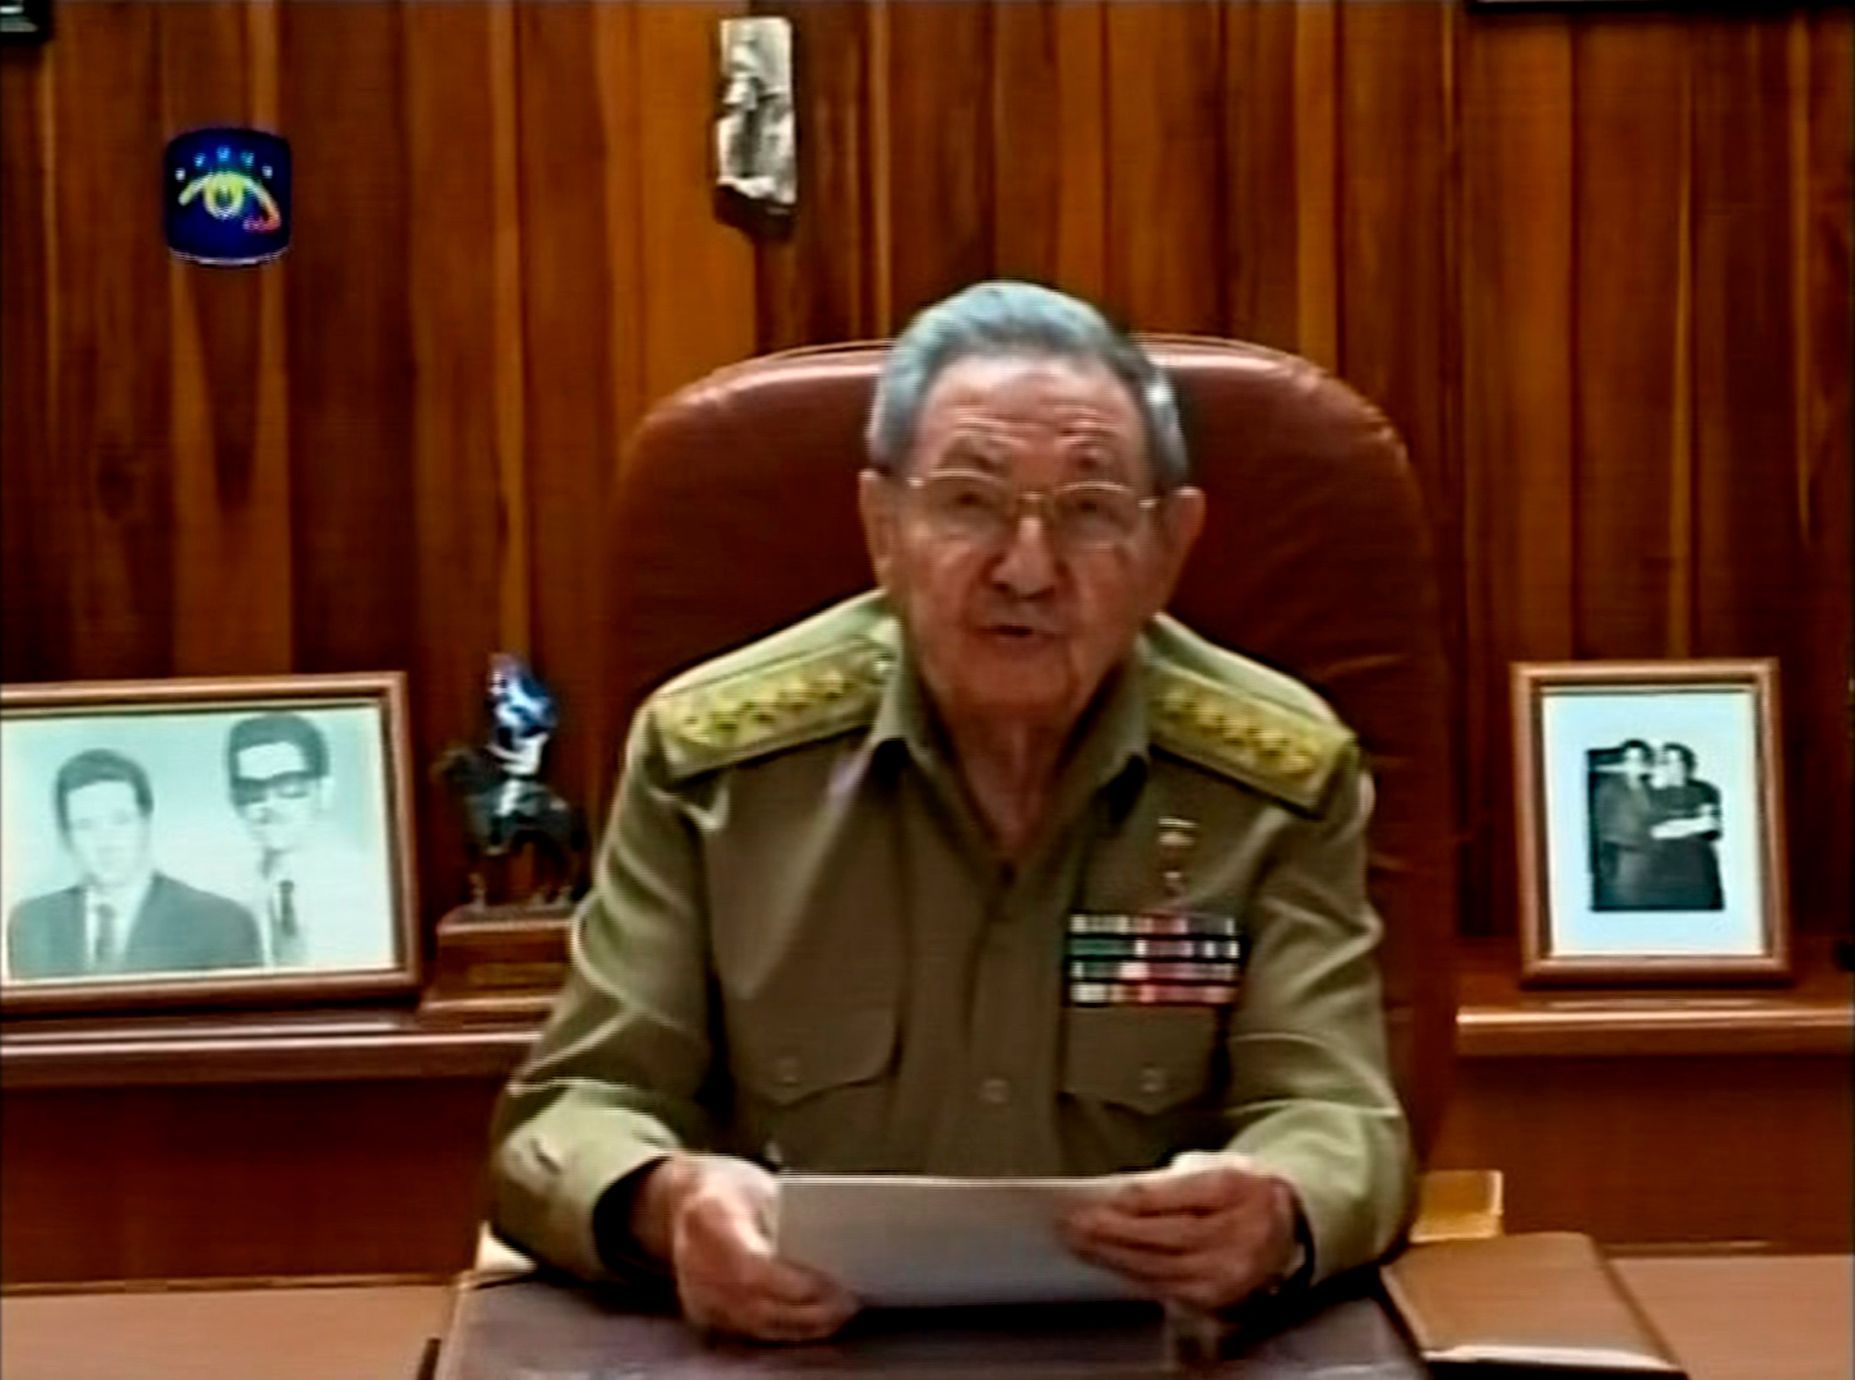 Cuba's President Raoul Castro speaks to the nation via public television in Havana